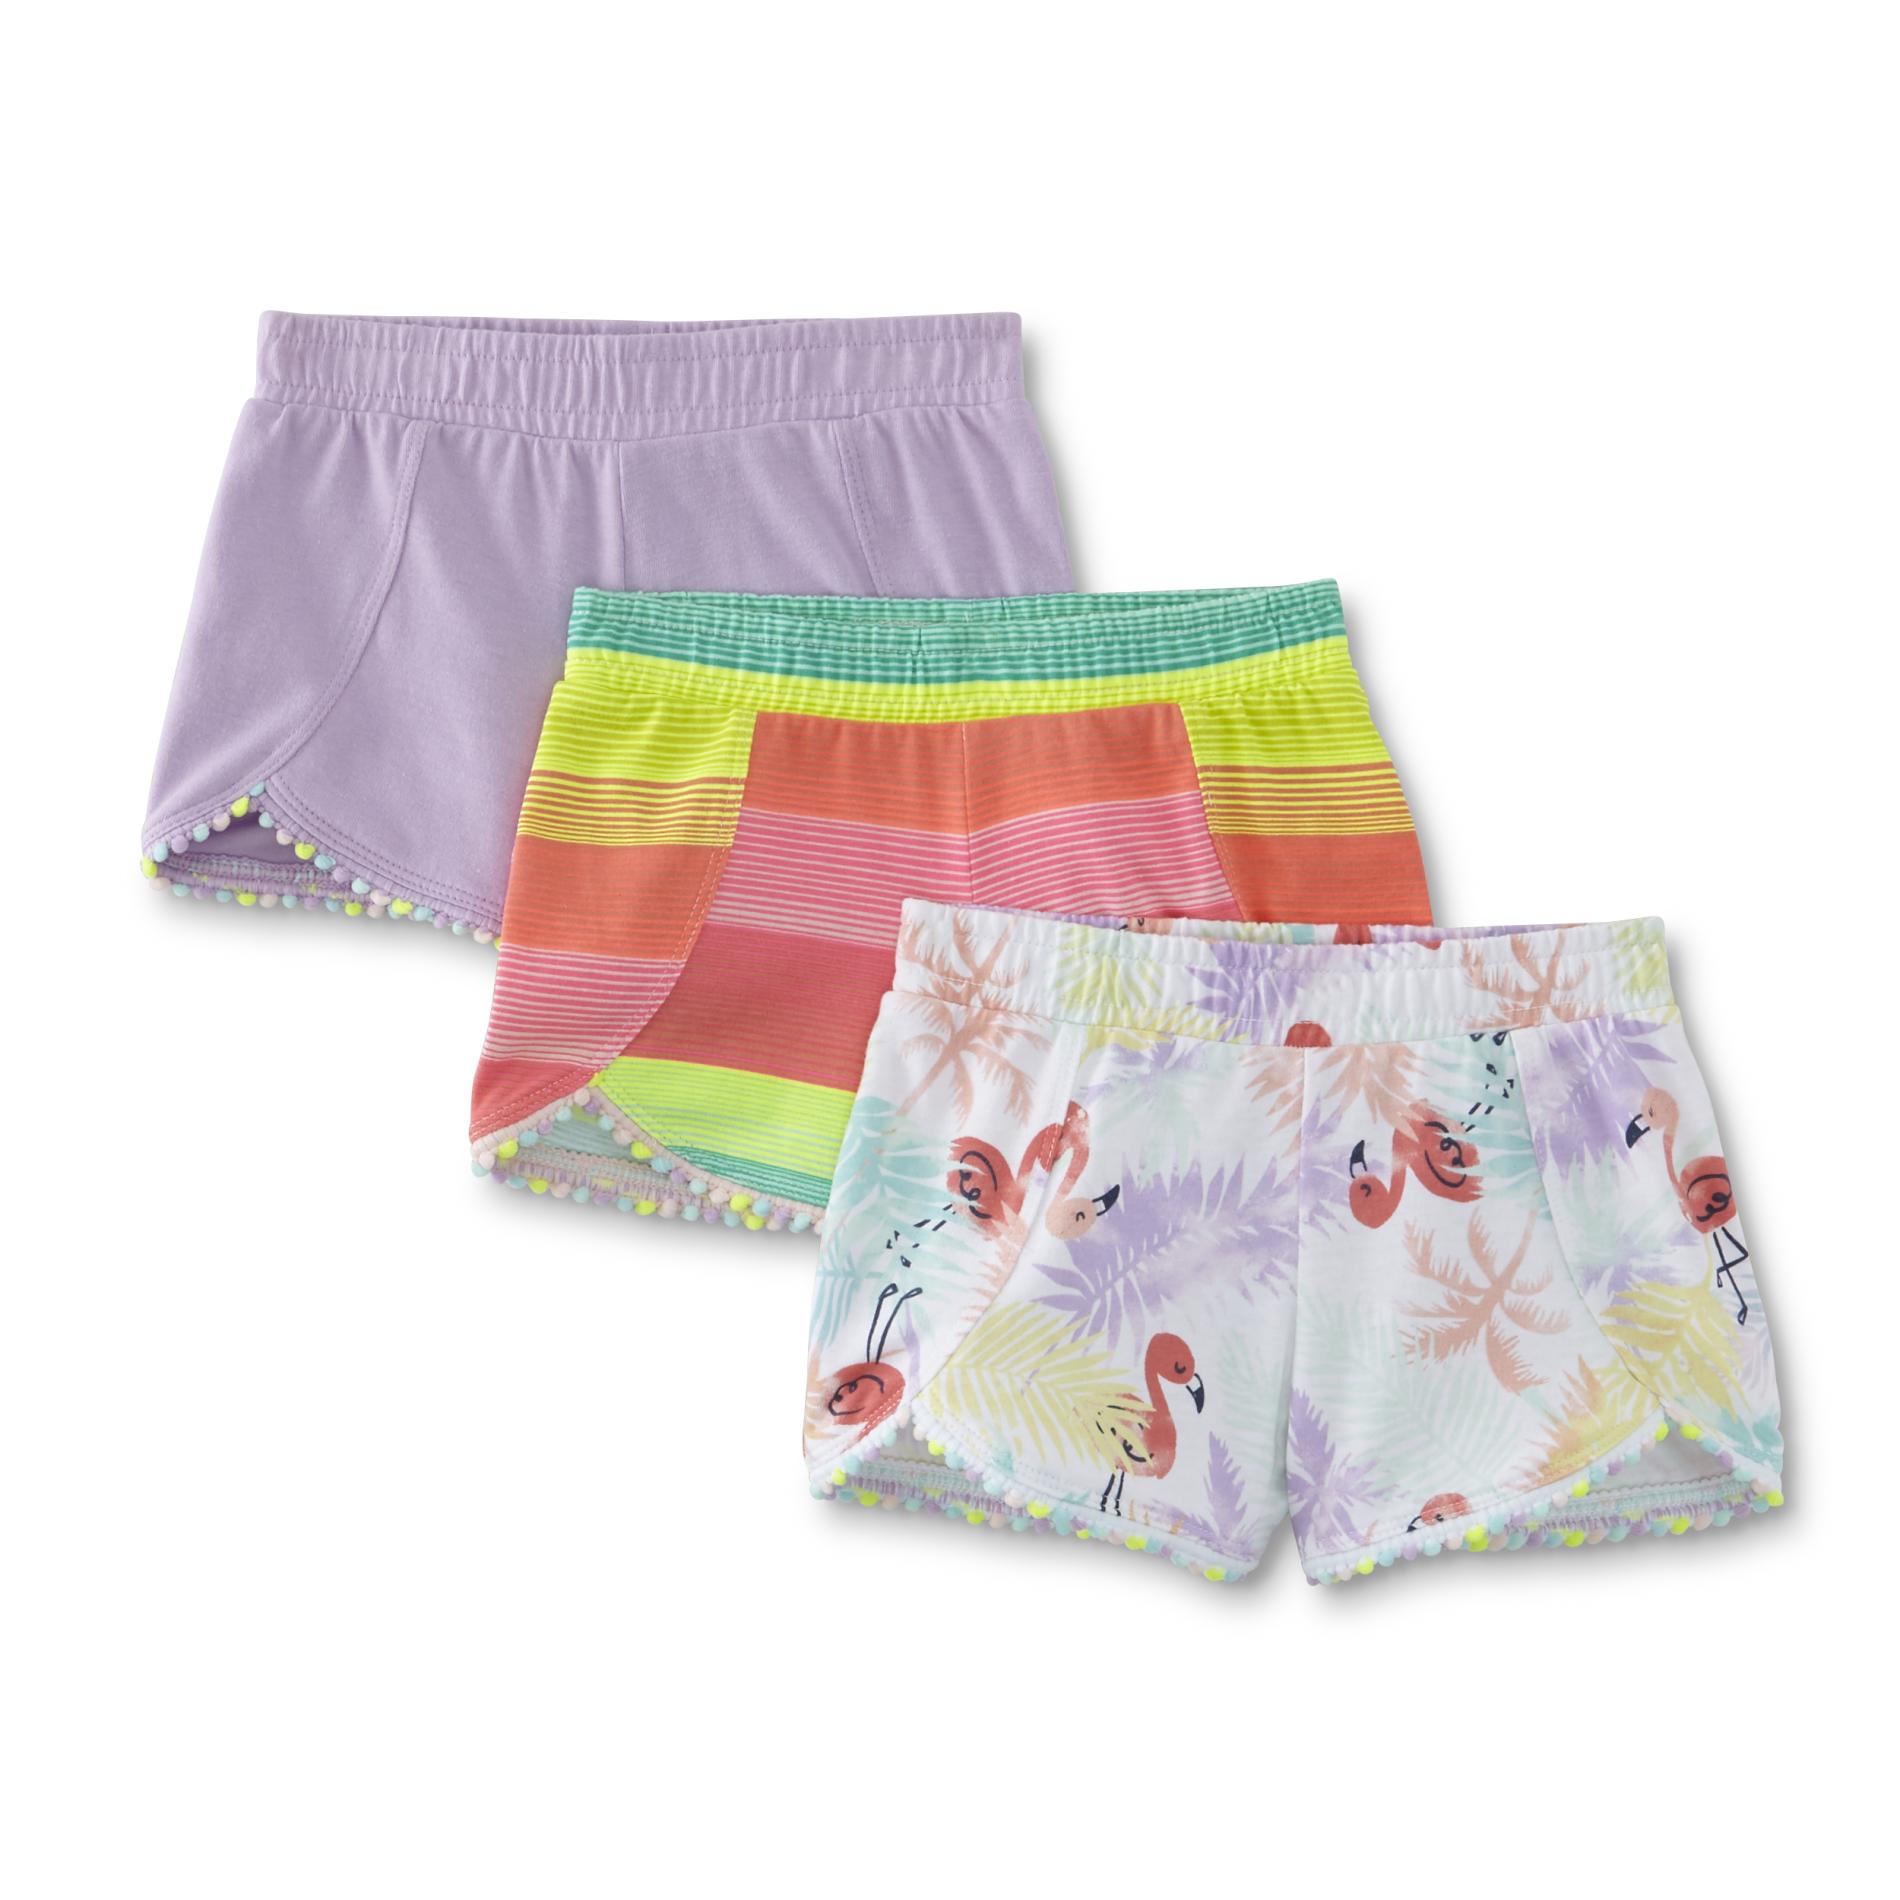 Toughskins Infant & Toddler Girls' 3-Pack Shorts - Striped & Flamingo